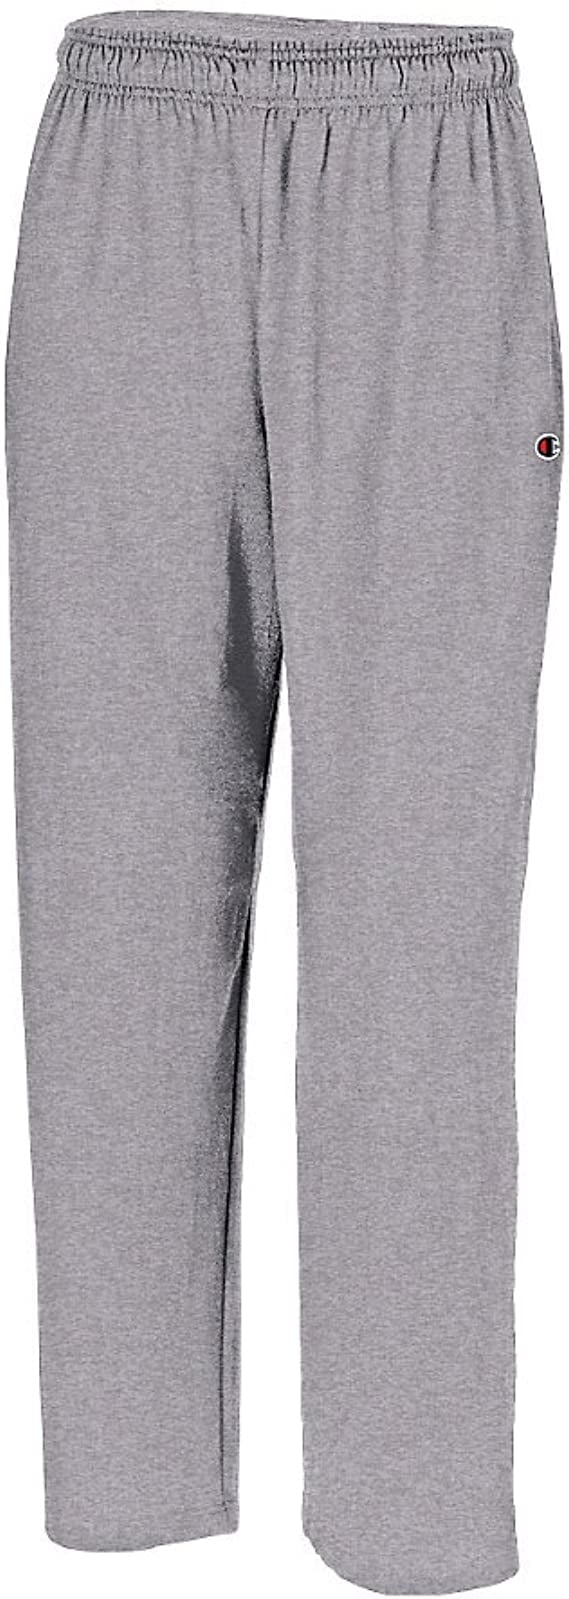 Champion P7309 Authentic Men's Open Bottom Jersey Pants Oxford Grey ...